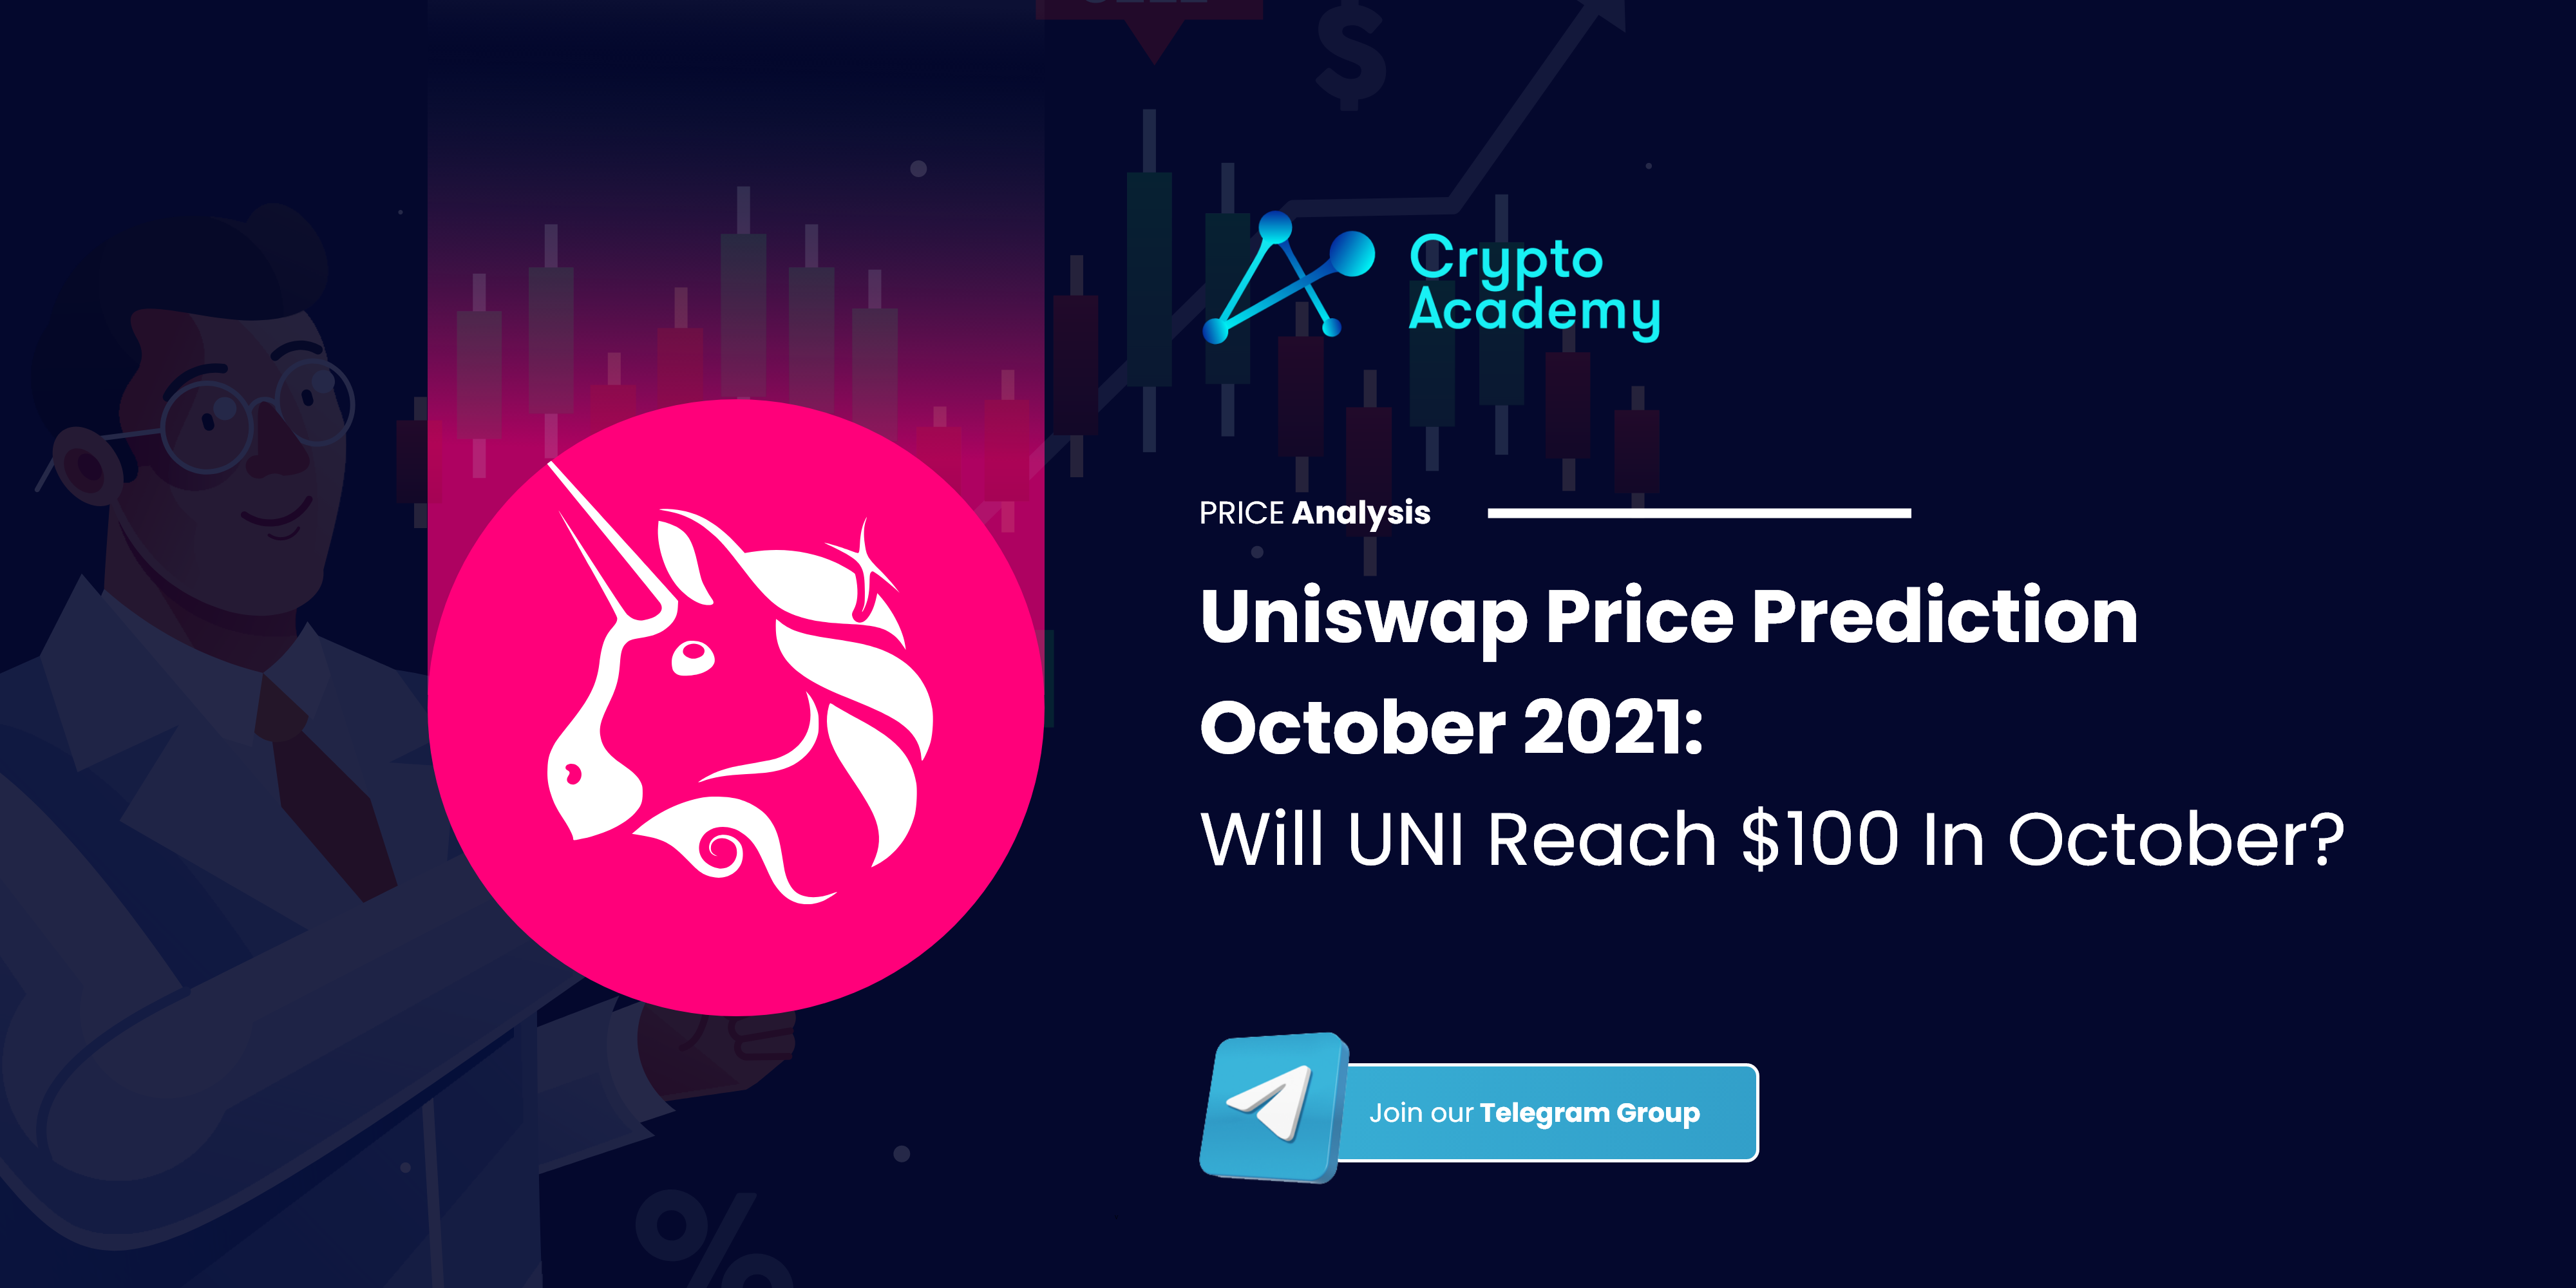 Uniswap Price Prediction October 2021: Will UNI Reach $100 In October?